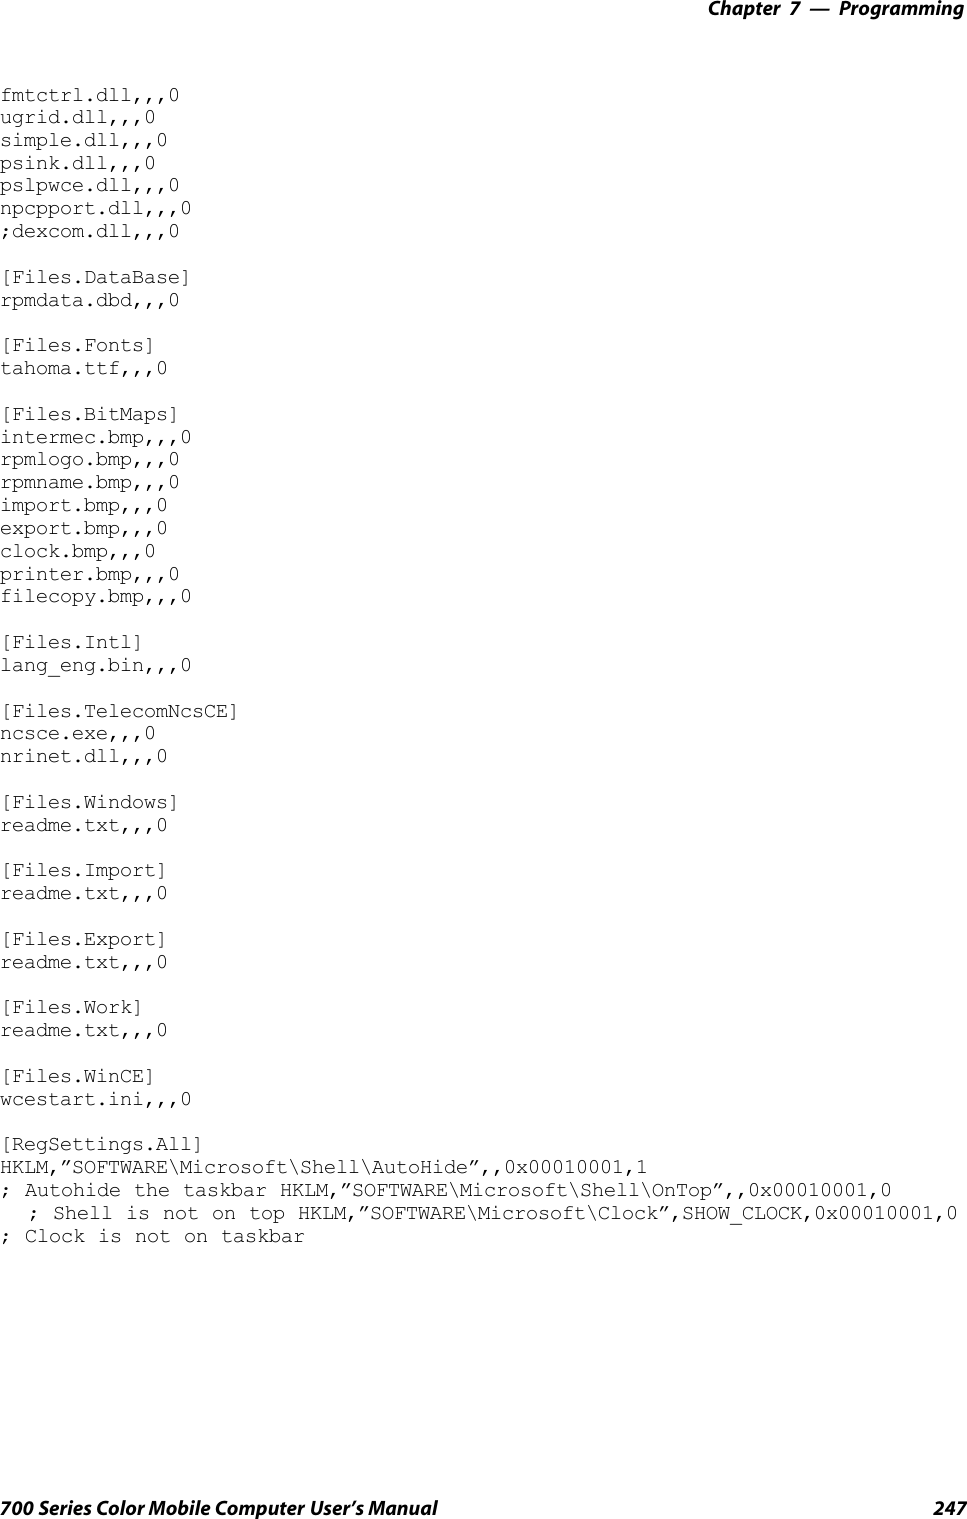 Programming—Chapter 7247700 Series Color Mobile Computer User’s Manualfmtctrl.dll,,,0ugrid.dll,,,0simple.dll,,,0psink.dll,,,0pslpwce.dll,,,0npcpport.dll,,,0;dexcom.dll,,,0[Files.DataBase]rpmdata.dbd,,,0[Files.Fonts]tahoma.ttf,,,0[Files.BitMaps]intermec.bmp,,,0rpmlogo.bmp,,,0rpmname.bmp,,,0import.bmp,,,0export.bmp,,,0clock.bmp,,,0printer.bmp,,,0filecopy.bmp,,,0[Files.Intl]lang_eng.bin,,,0[Files.TelecomNcsCE]ncsce.exe,,,0nrinet.dll,,,0[Files.Windows]readme.txt,,,0[Files.Import]readme.txt,,,0[Files.Export]readme.txt,,,0[Files.Work]readme.txt,,,0[Files.WinCE]wcestart.ini,,,0[RegSettings.All]HKLM,”SOFTWARE\Microsoft\Shell\AutoHide”,,0x00010001,1; Autohide the taskbar HKLM,”SOFTWARE\Microsoft\Shell\OnTop”,,0x00010001,0; Shell is not on top HKLM,”SOFTWARE\Microsoft\Clock”,SHOW_CLOCK,0x00010001,0; Clock is not on taskbar